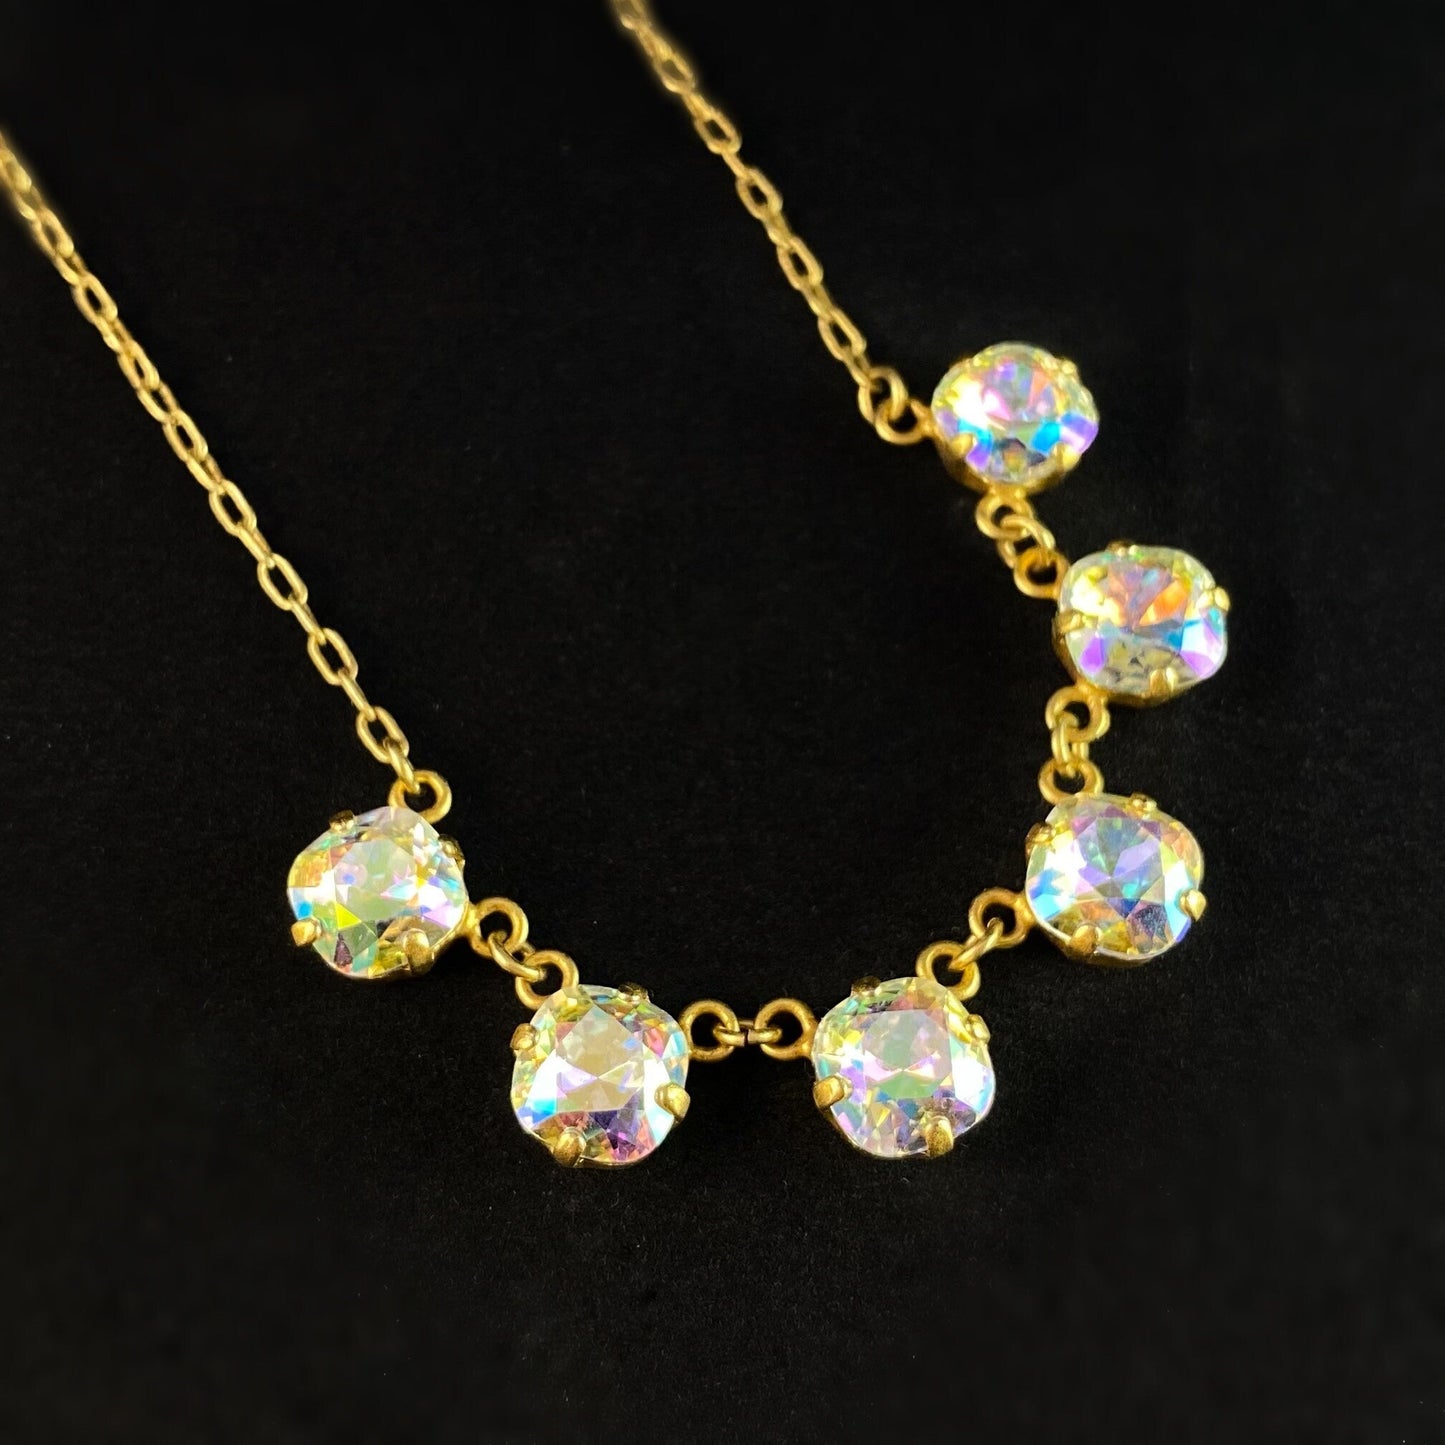 Cushion Cut Swarovski Crystal Pendant Necklace, Opal - La Vie Parisienne by Catherine Popesco